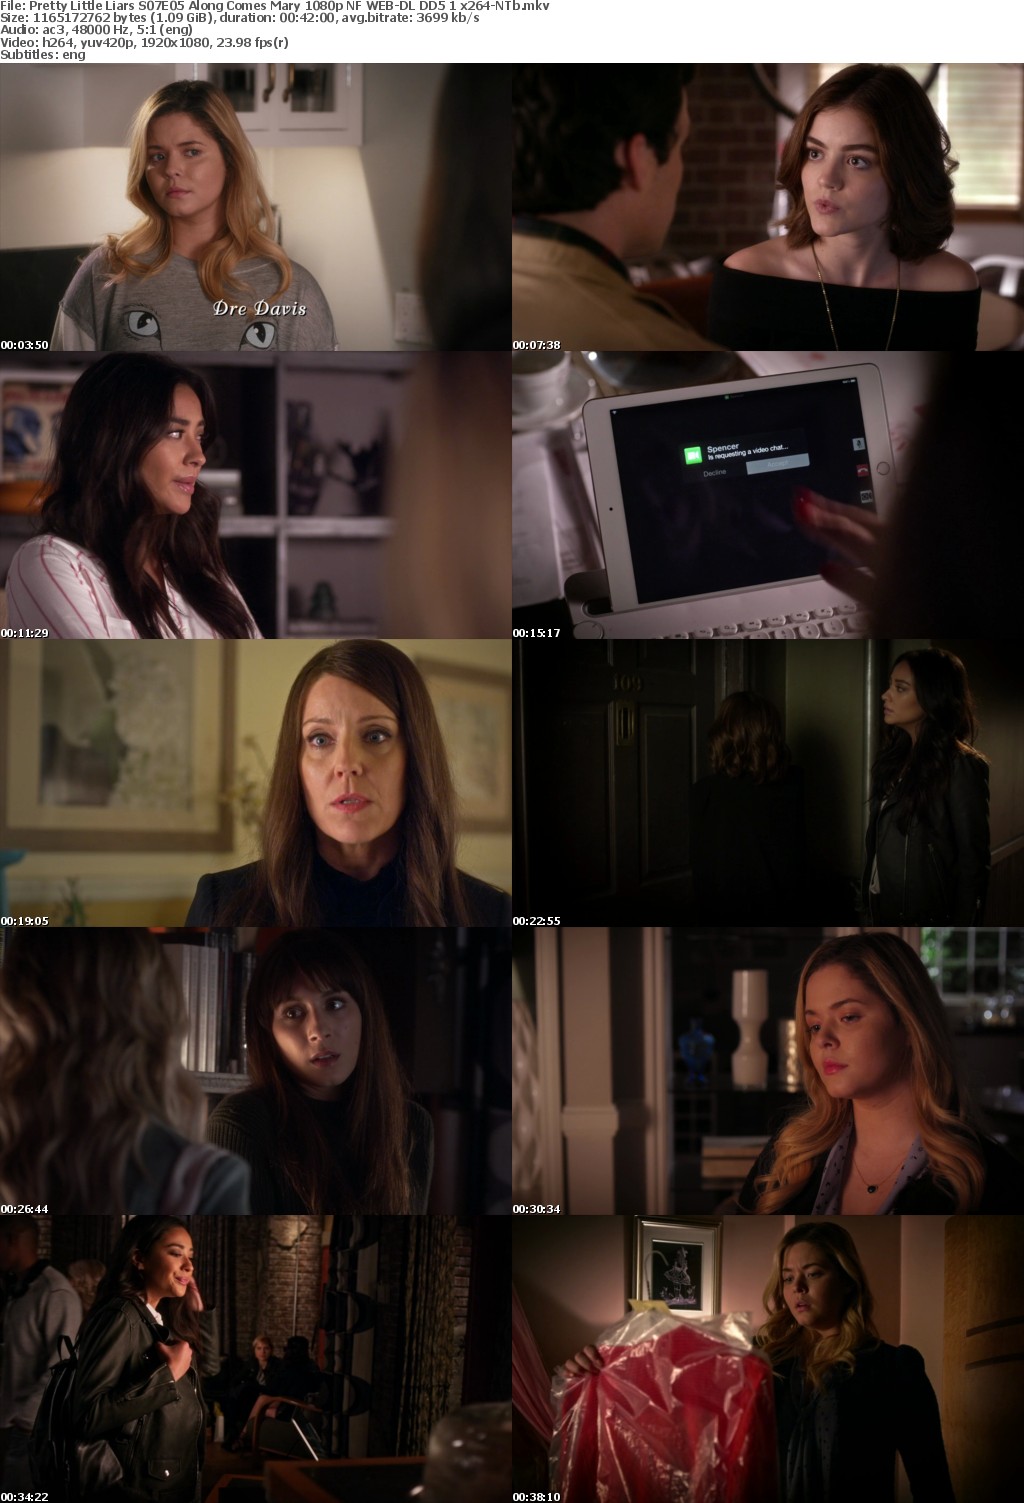 Pretty Little Liars S07E05 Along Comes Mary 1080p NF WEB-DL DD5 1 x264-NTb